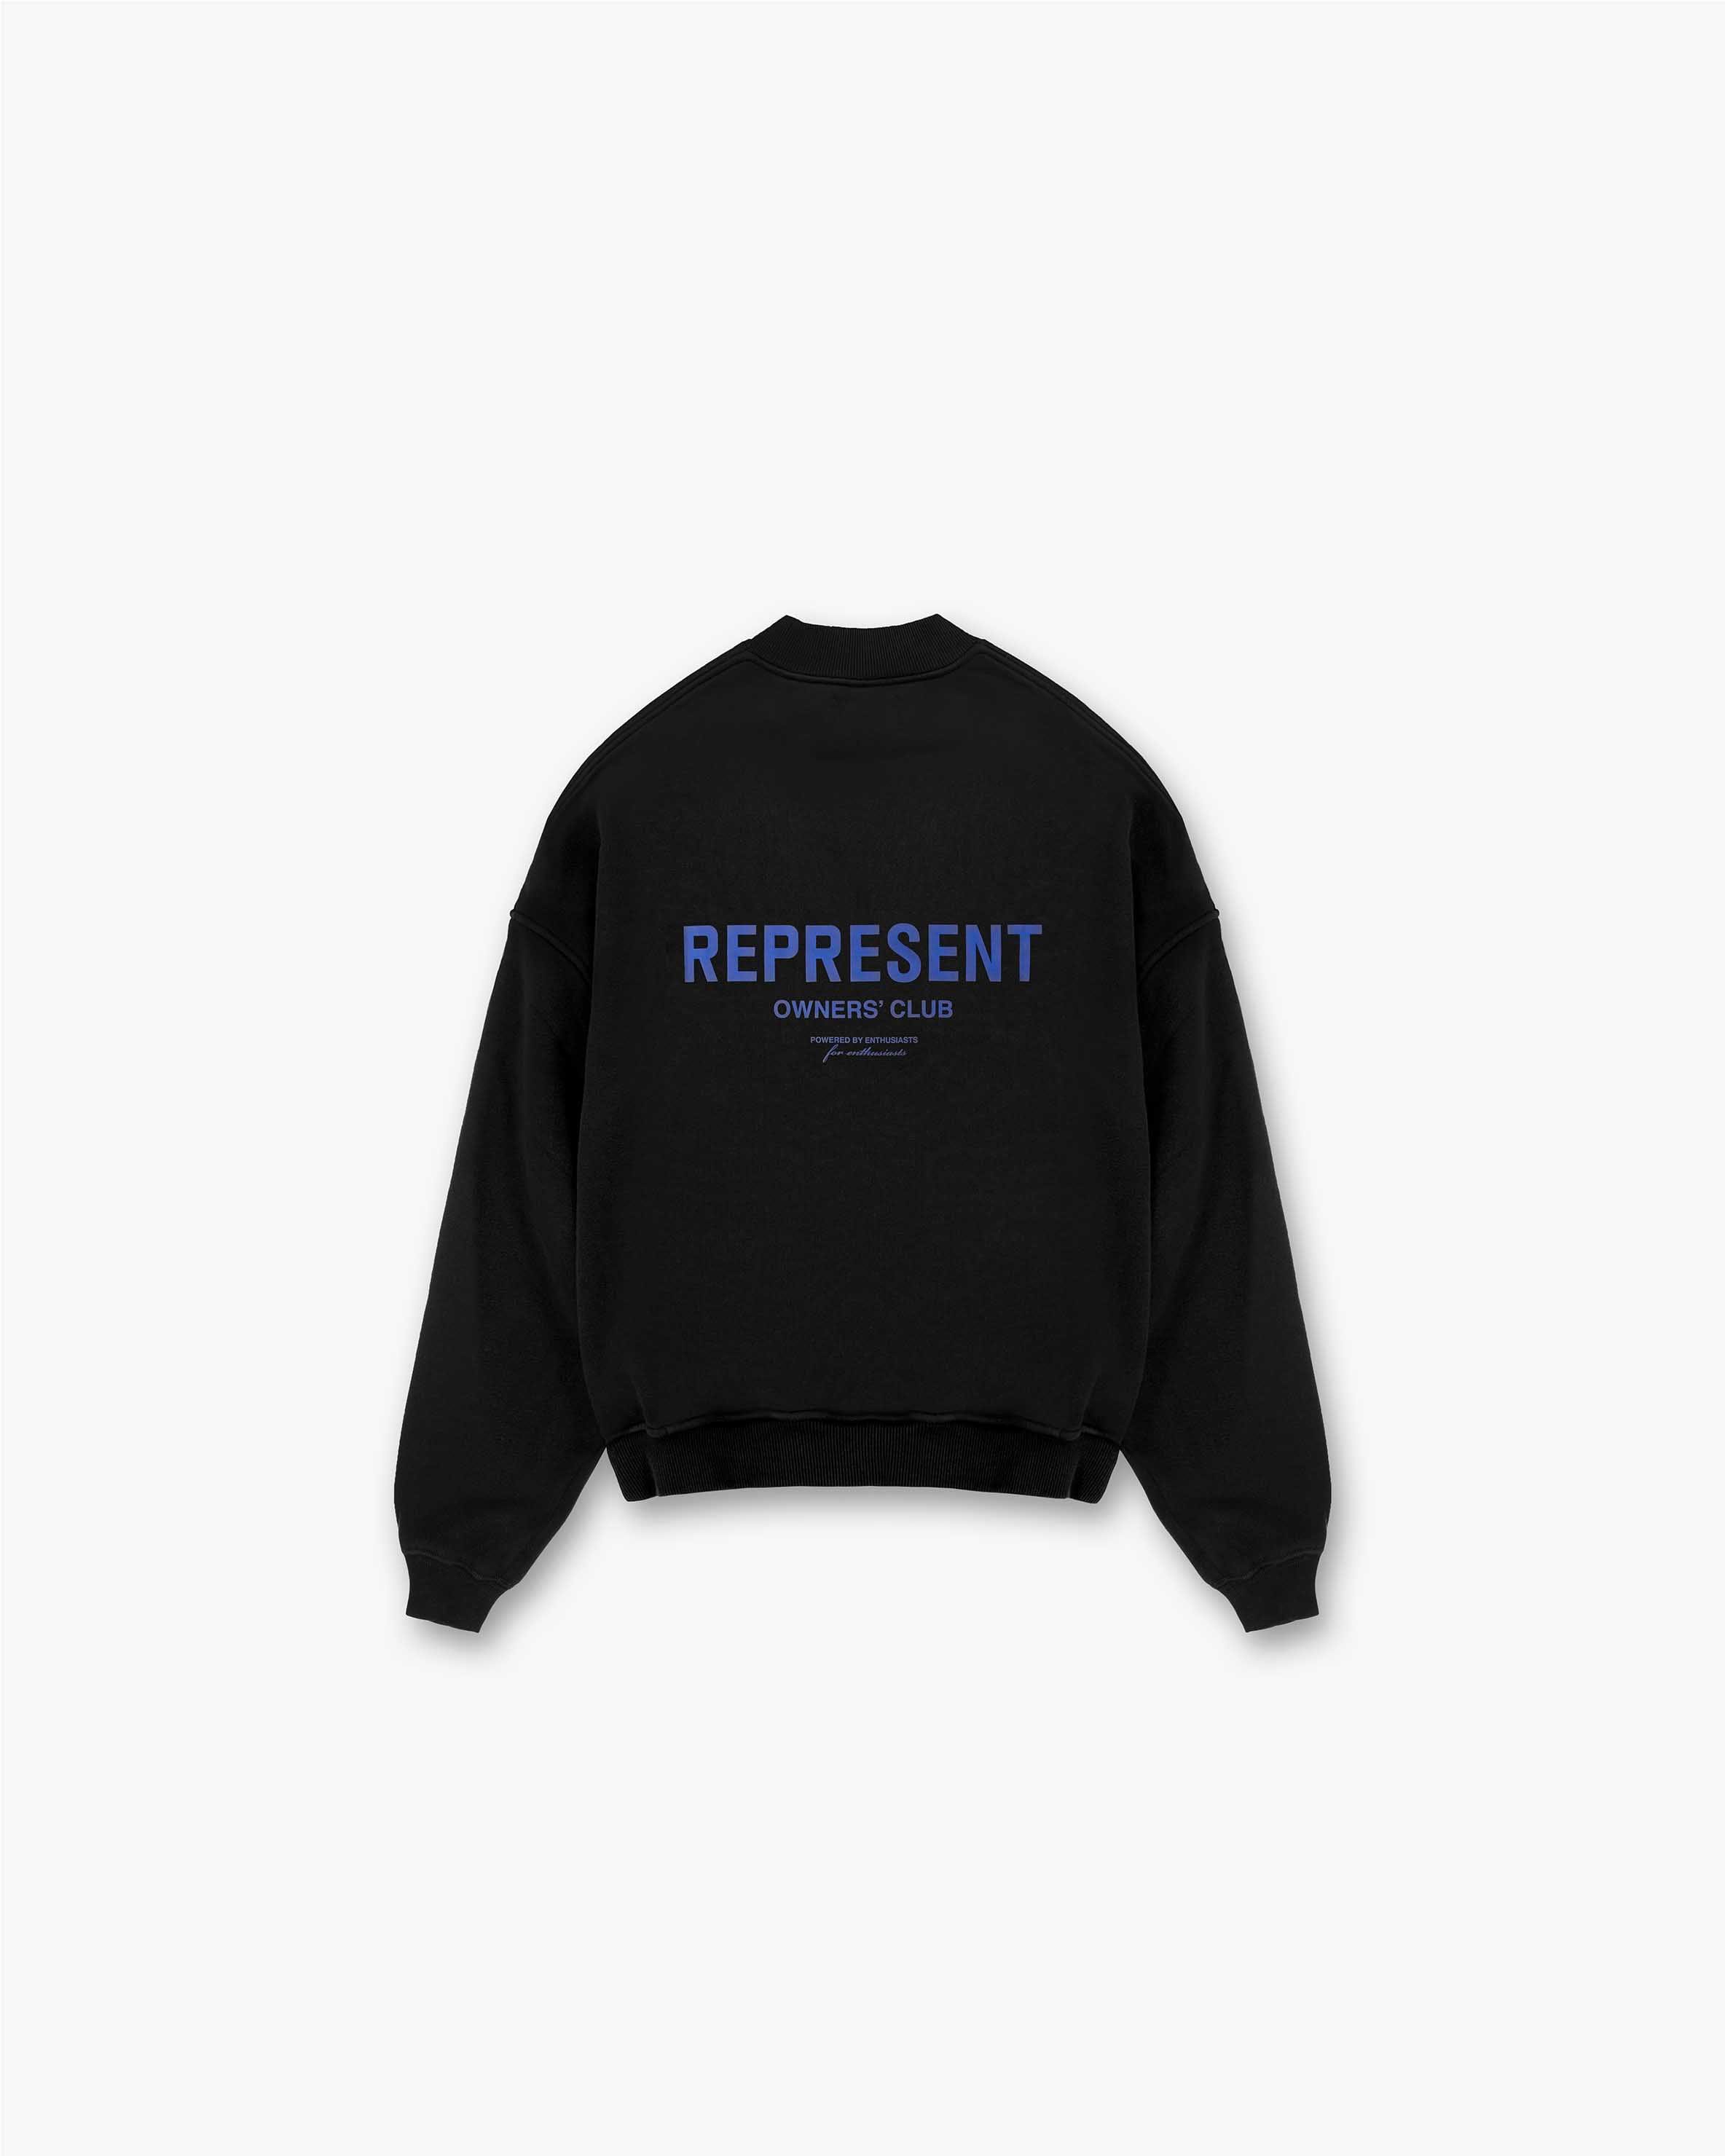 Represent Owners Club Sweater - Black Cobalt | REPRESENT CLO